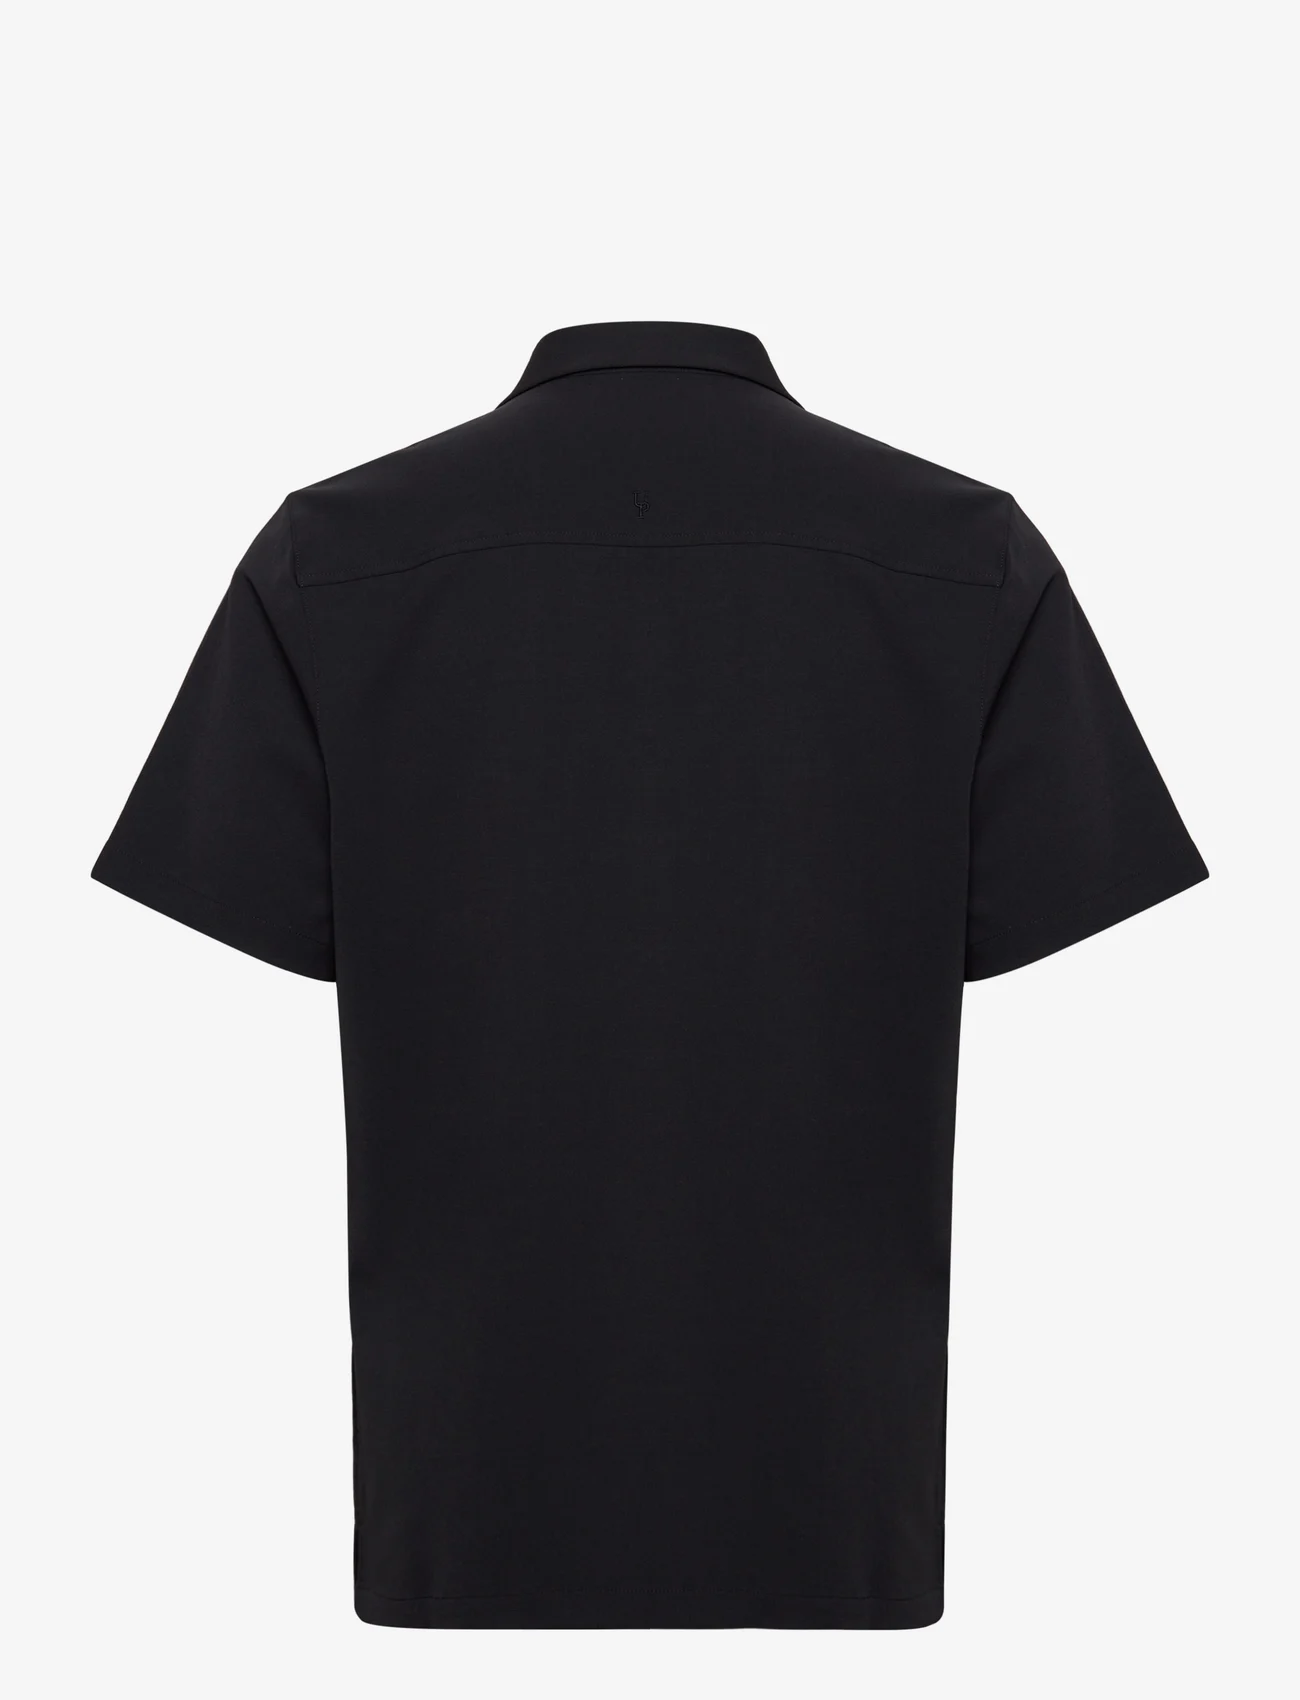 Urban Pioneers - Sheen Shirt - basic shirts - dark navy - 1